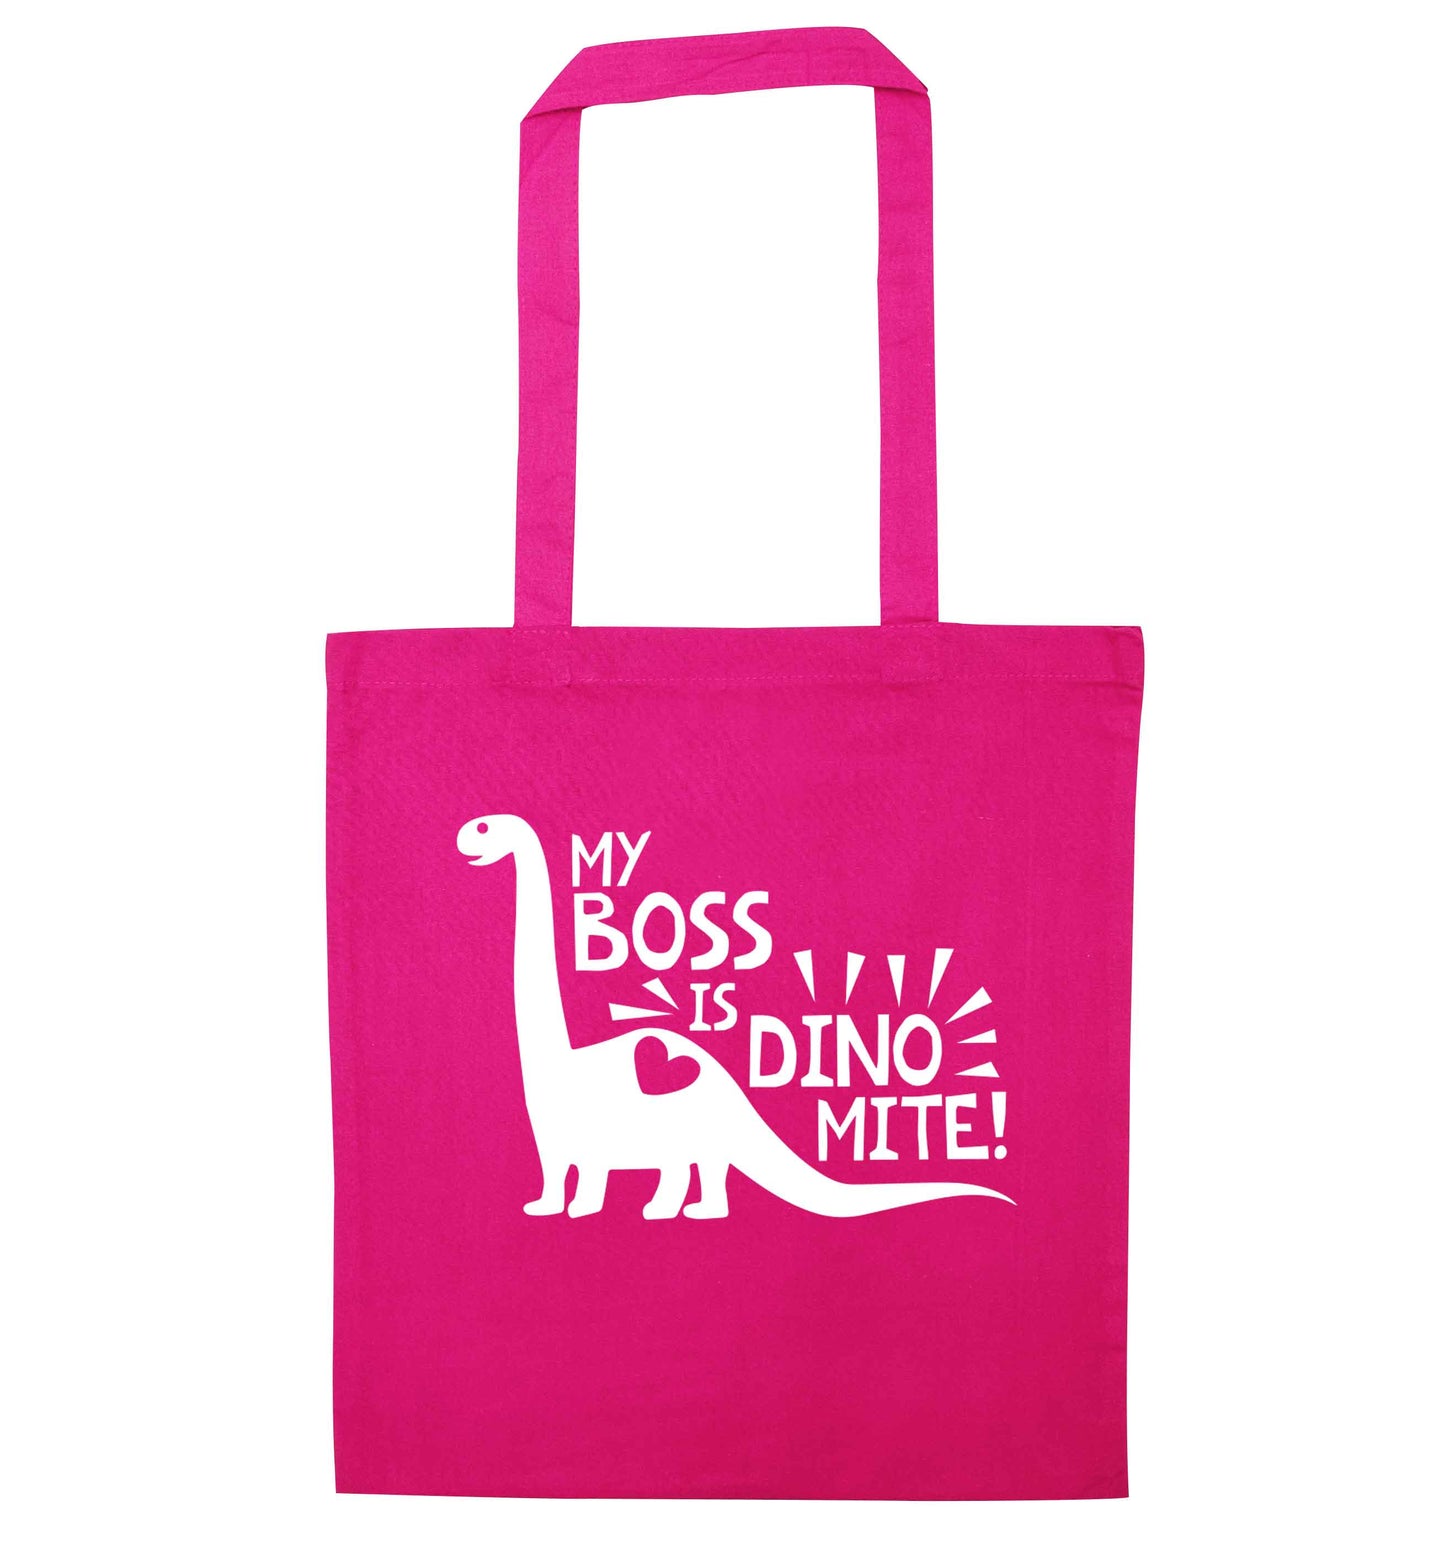 My boss is dinomite! pink tote bag